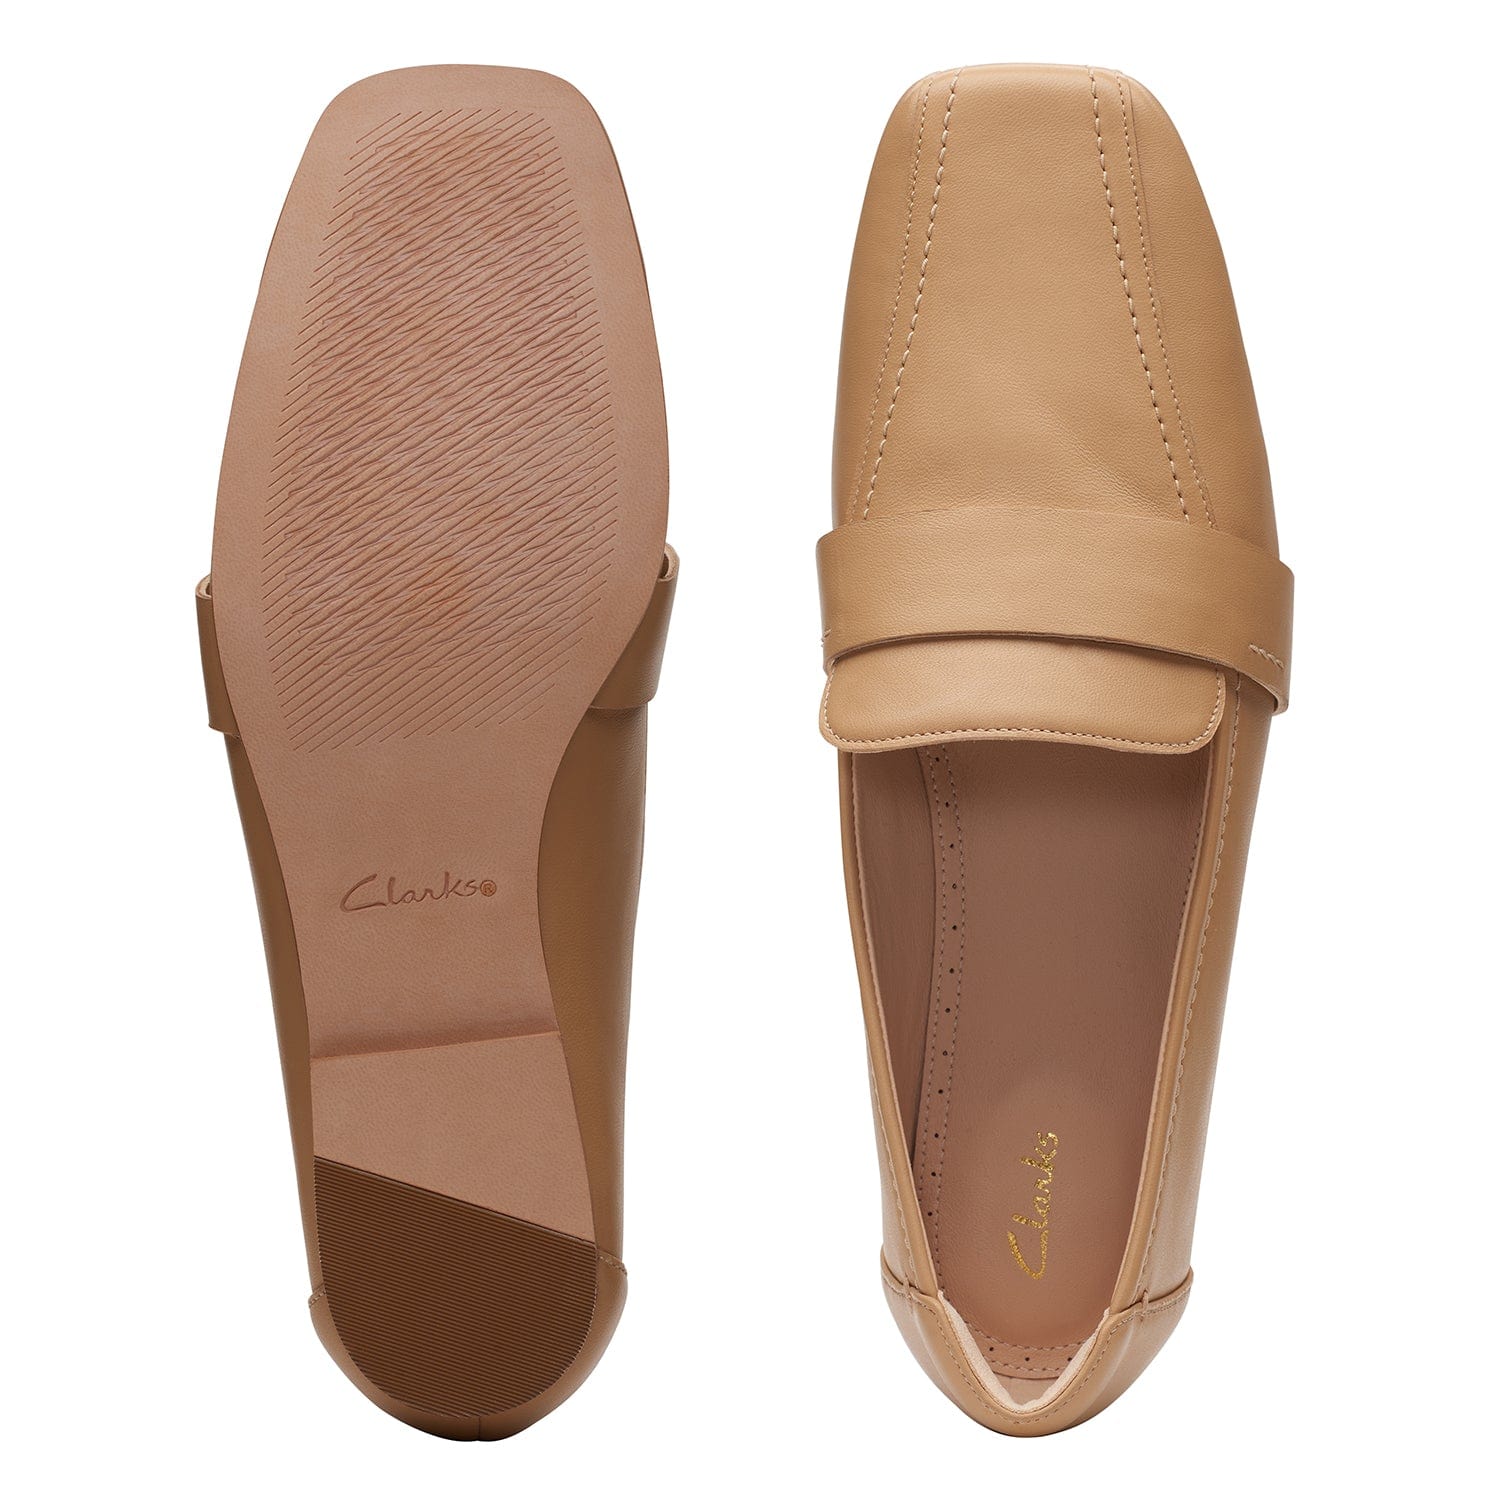 Clarks Seren Flat - Shoes - Camel Leather - 261716134 - D Width (Standard Fit)